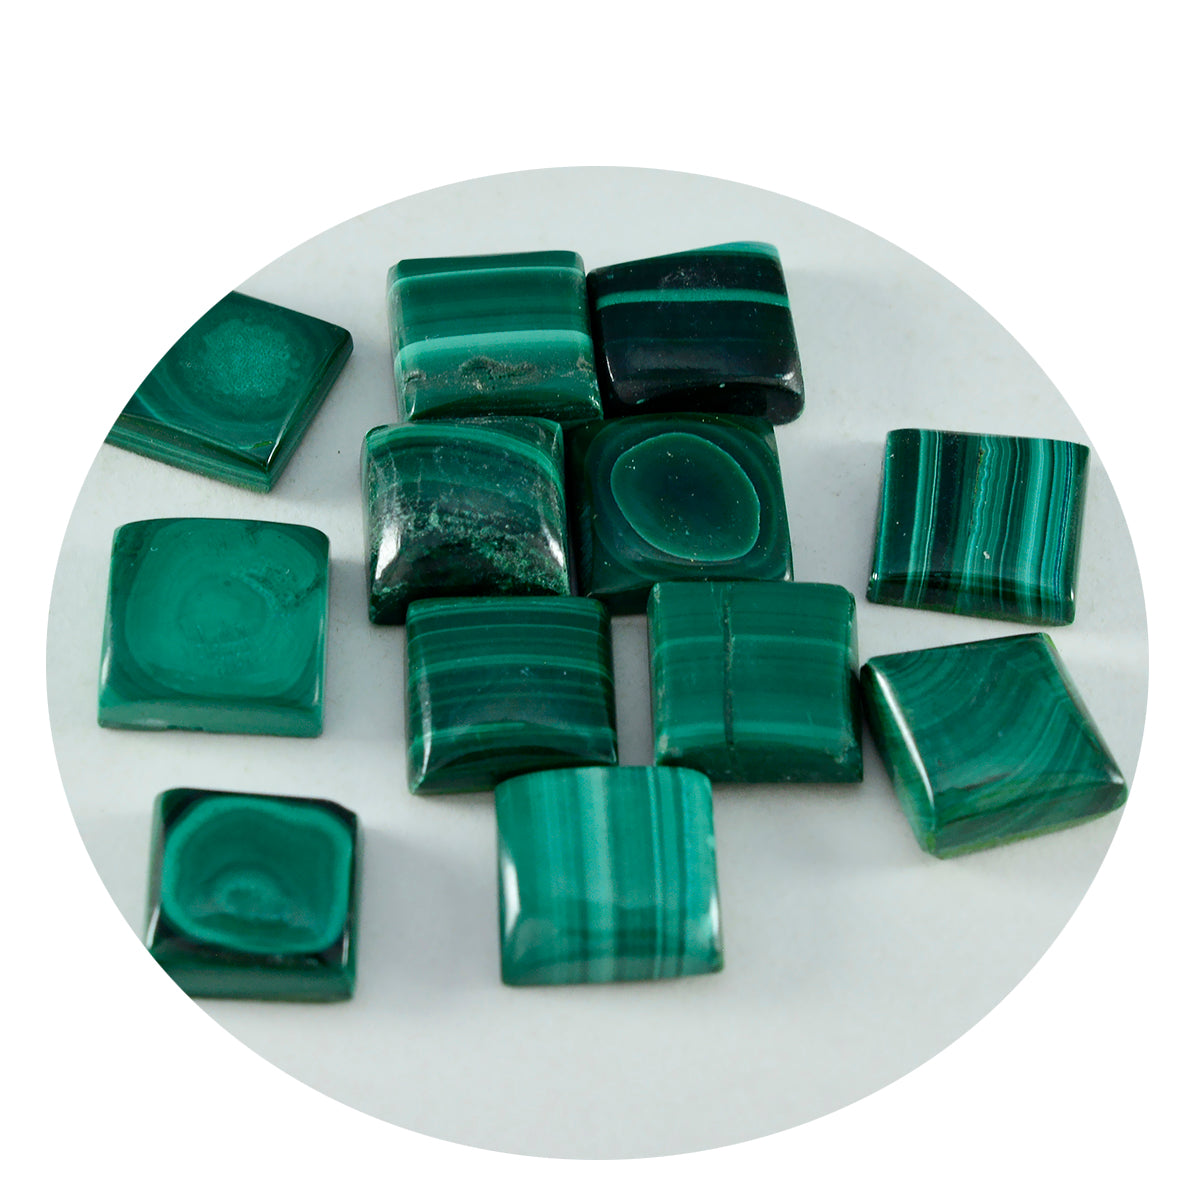 riyogems 1pc グリーン マラカイト カボション 8x8 mm 正方形のかわいい品質の石